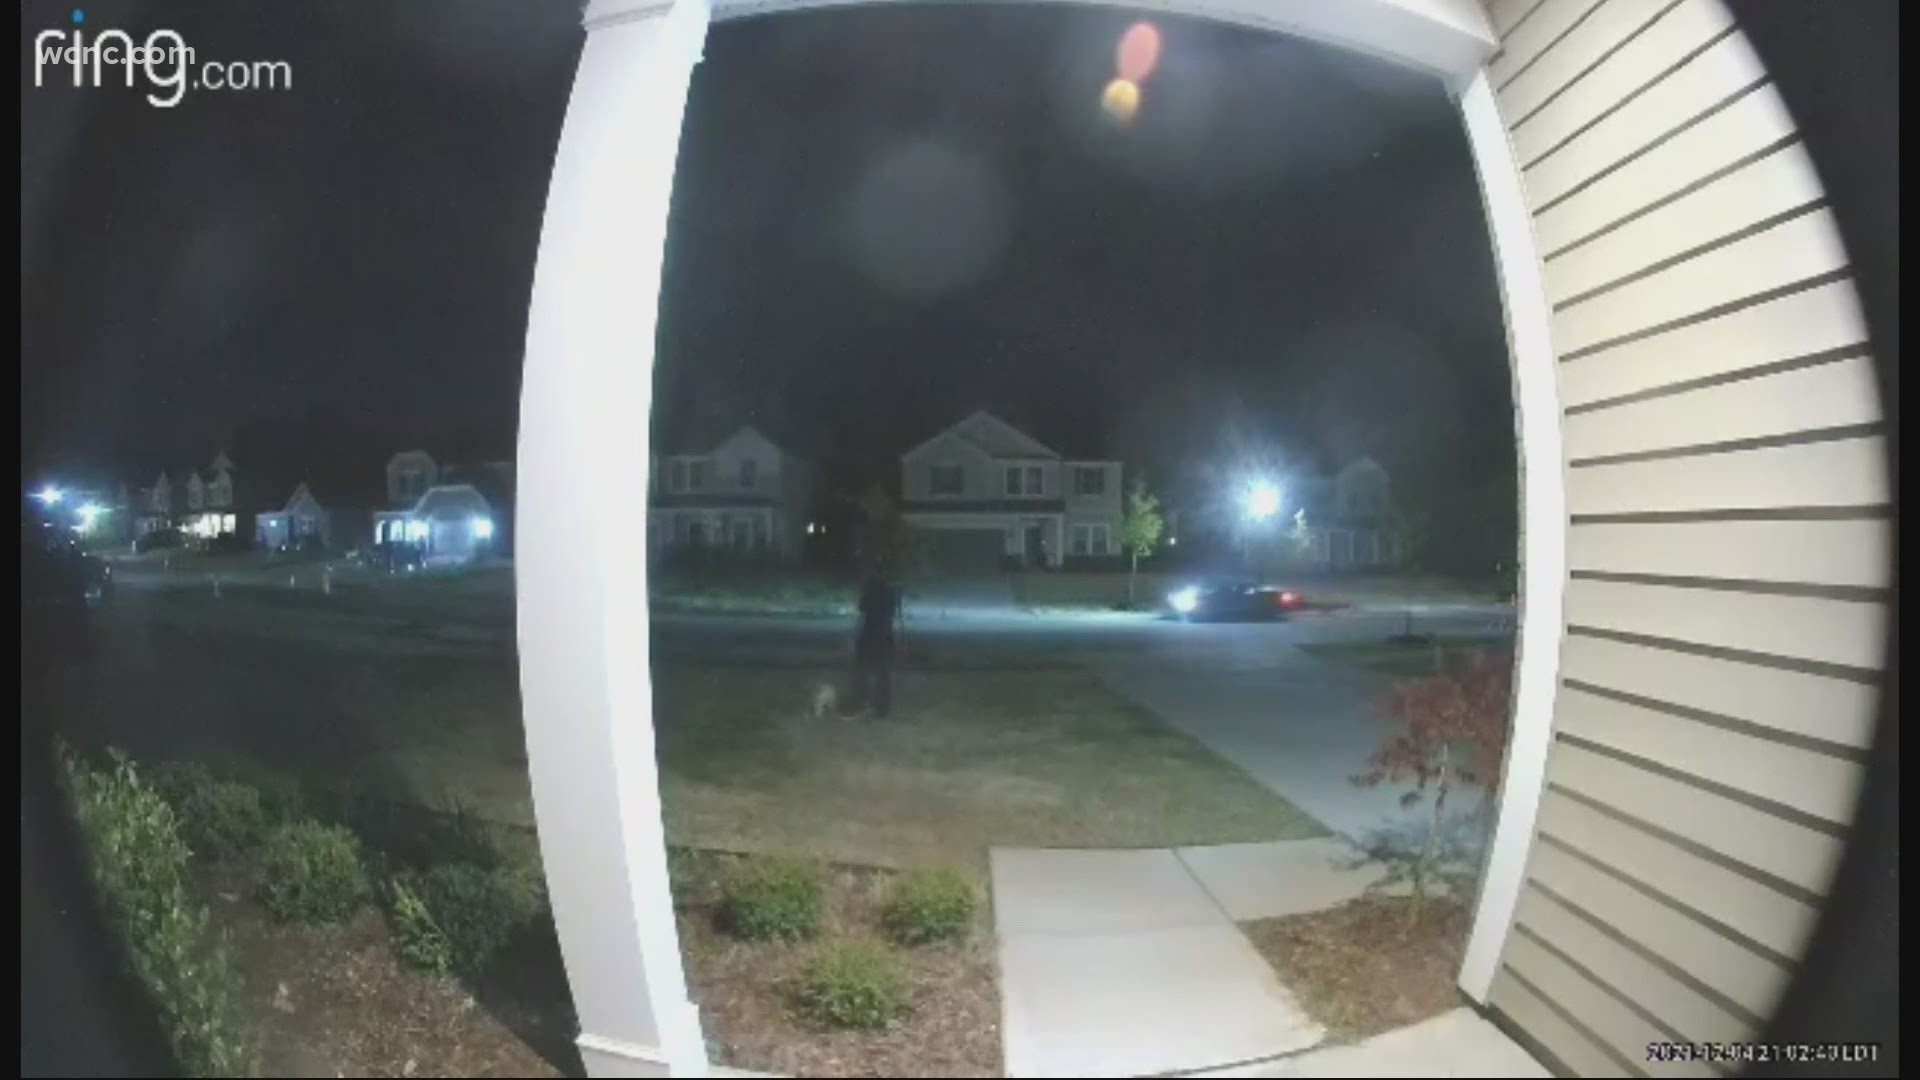 Hardwired doorbell cam alerts triggering from outside zones - Video  Doorbells - Ring Community